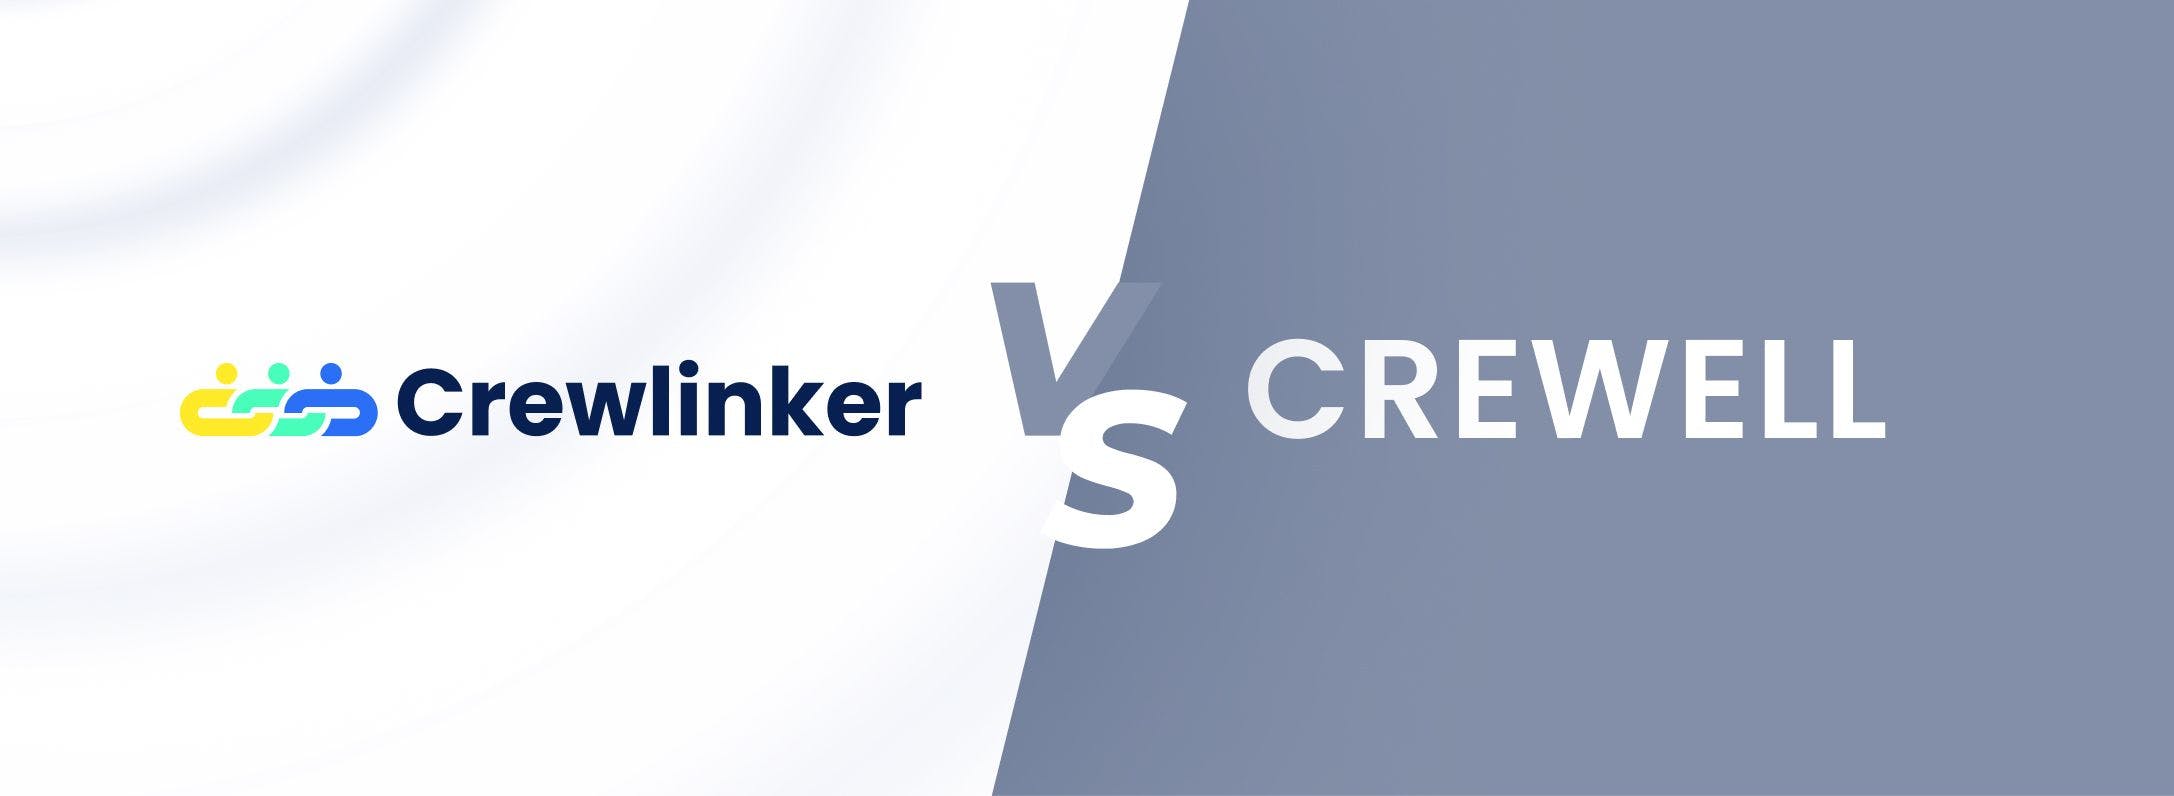 Crewlinker vs Crewell comparison